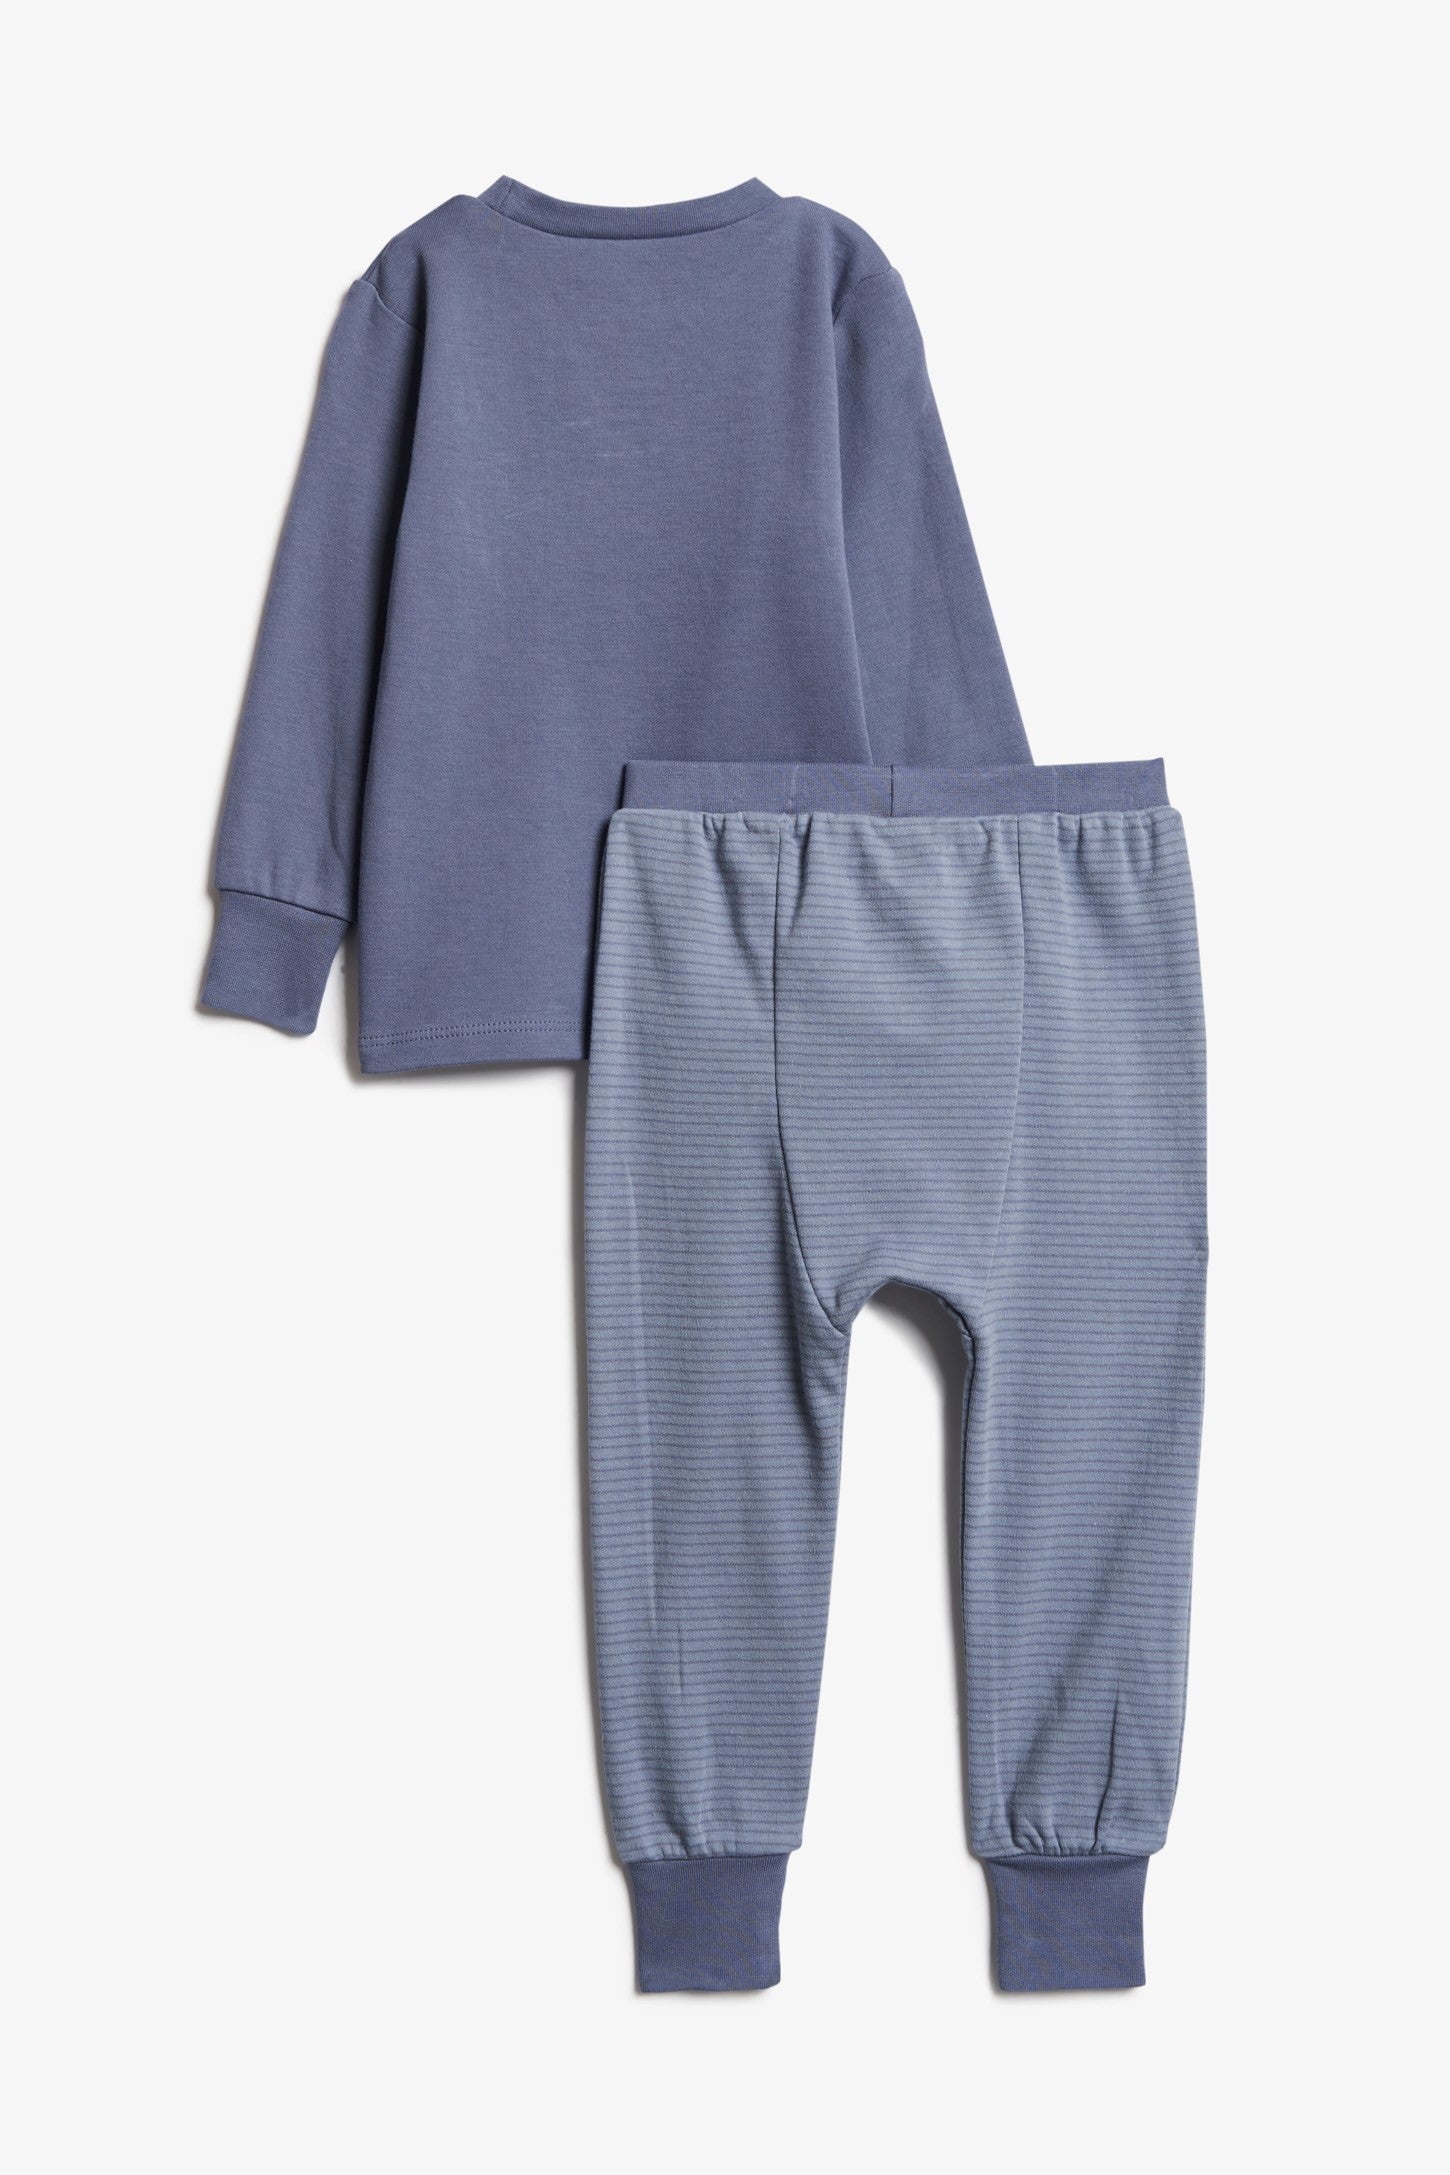 Pyjama 2-pièces imprimé, coton bio, 2T-3T - Bébé && BLEU